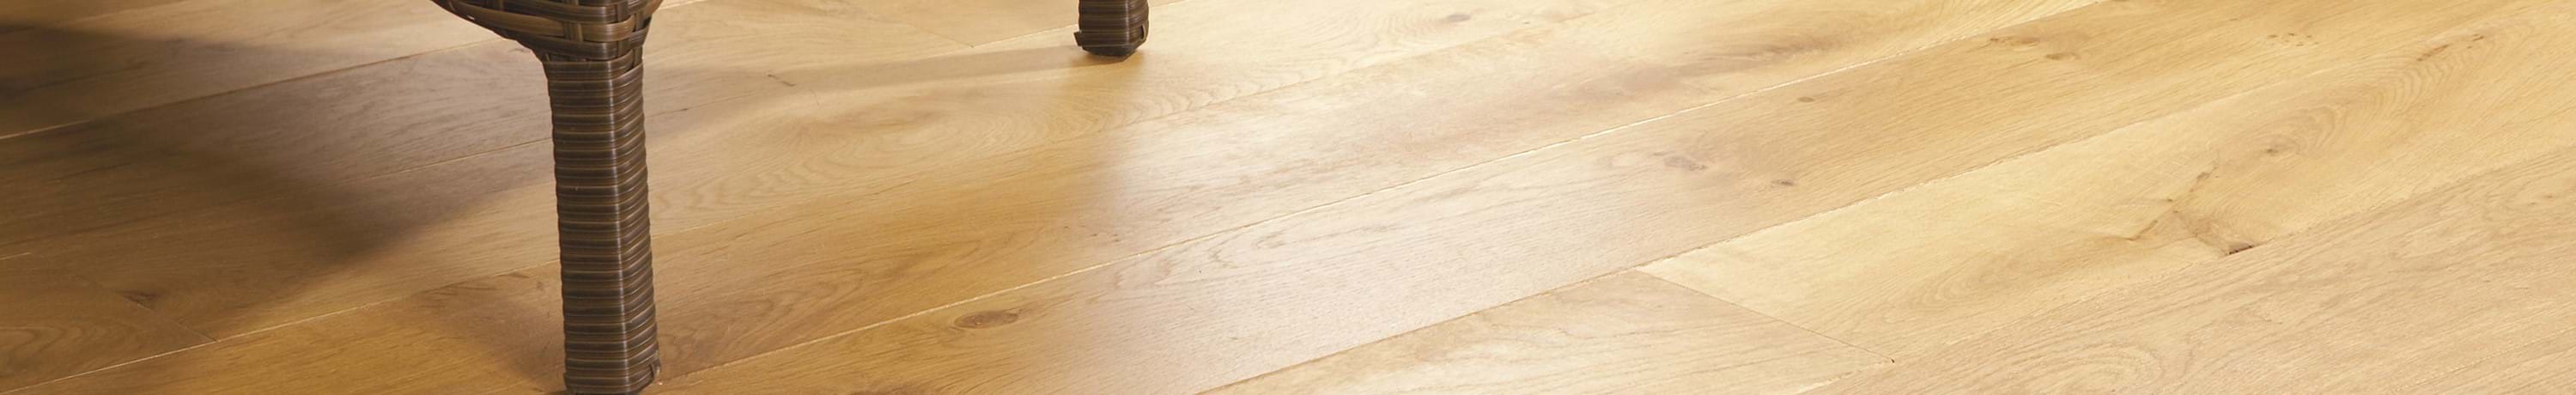 wood floor varnish category.jpg